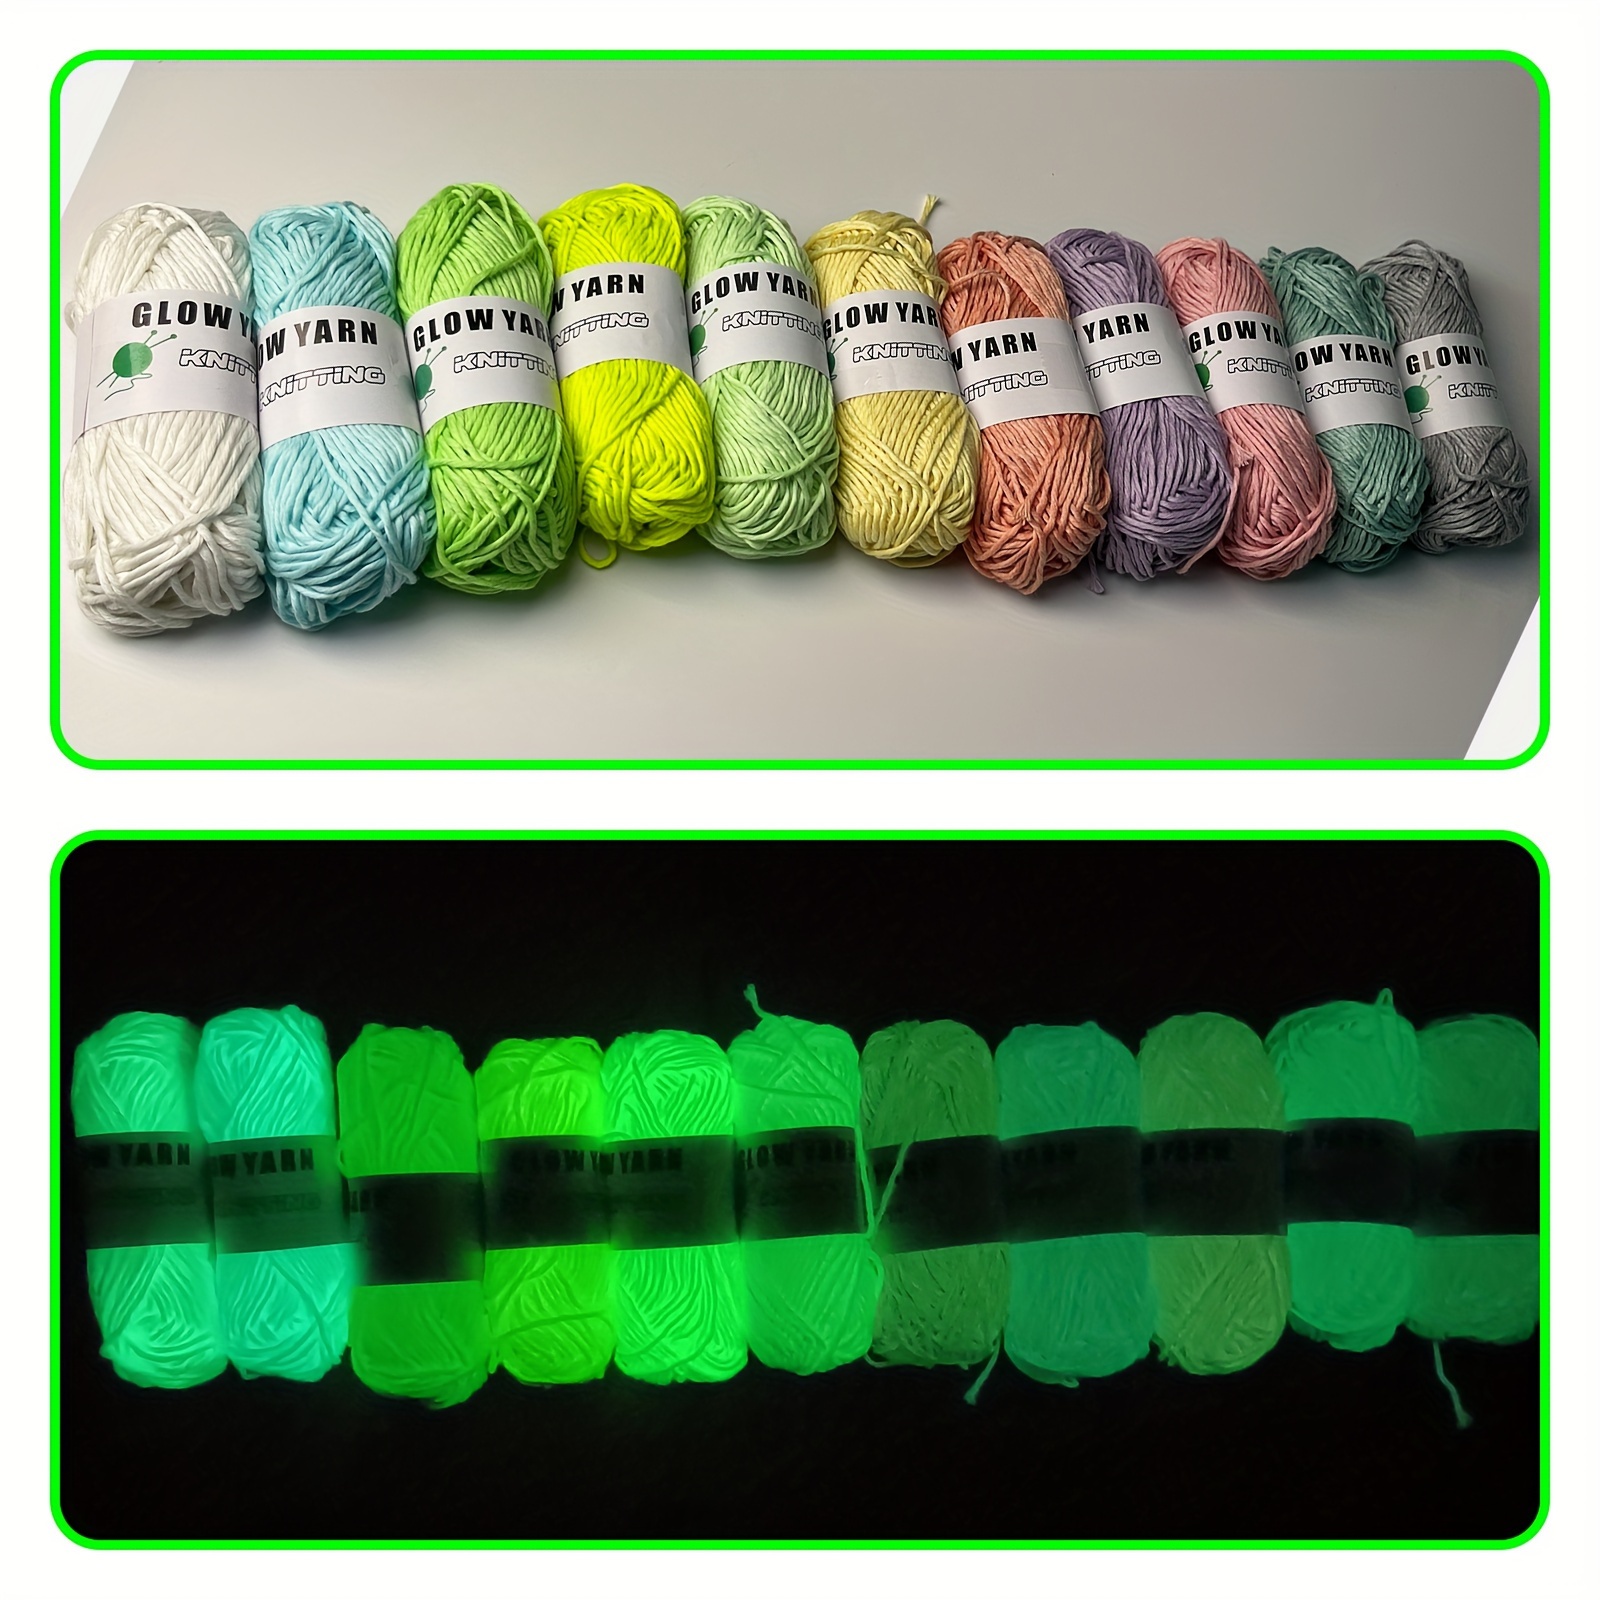 5 Pcs Glow in The Dark Yarn,Luminous Yarn for Crocheting,Glowing Yarn,Sewing Supplies for DIY Arts, Crafts & Sewing Beginners Glow in The Dark Party